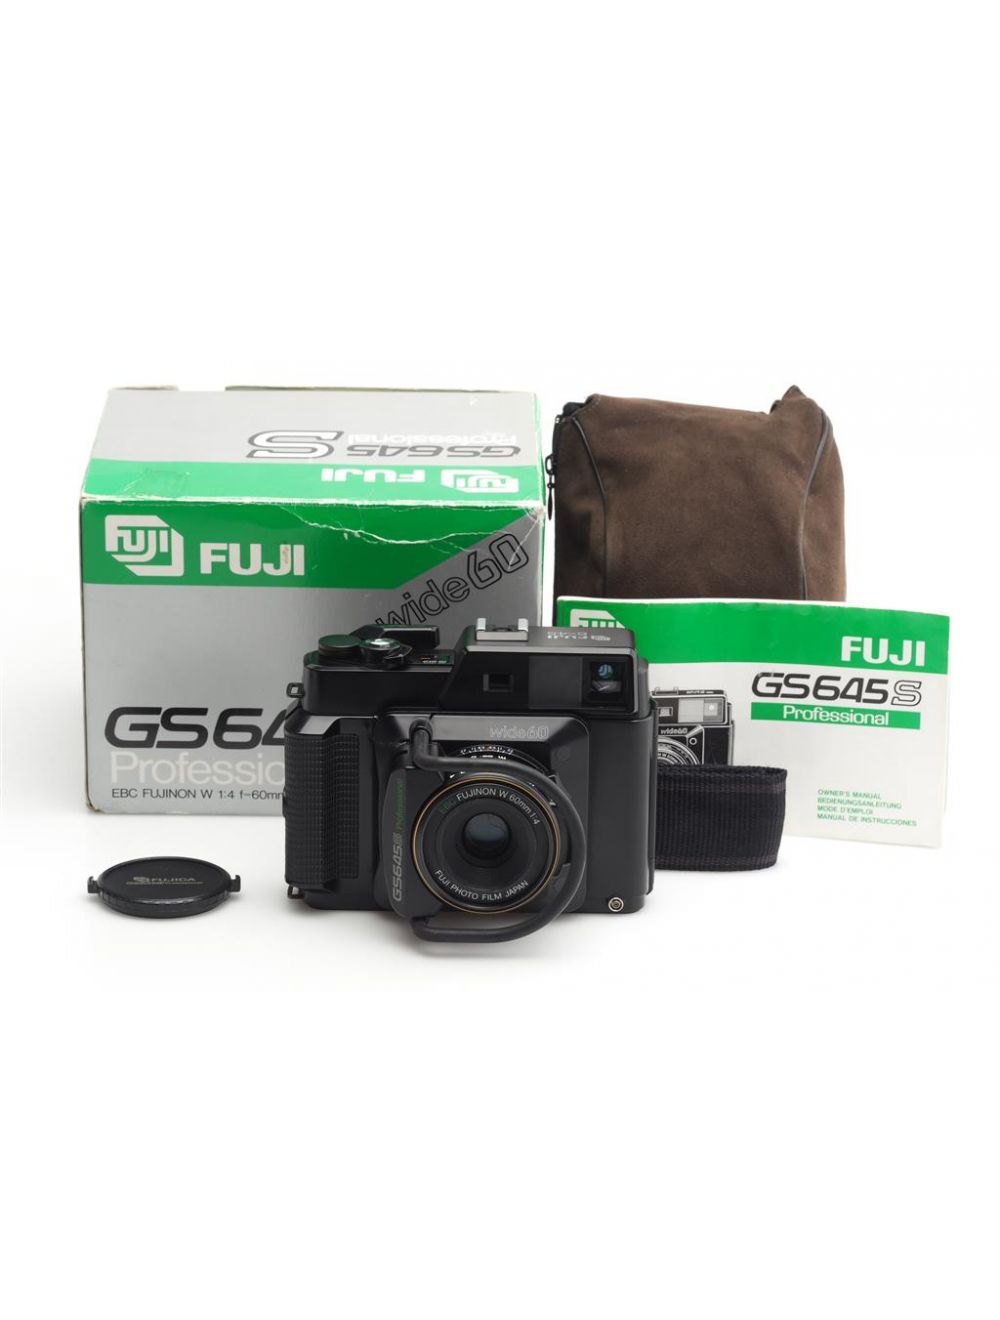 Fuji GS645 S Professional 6x4.5cm Wide 60 Rangefinder Camera | JO